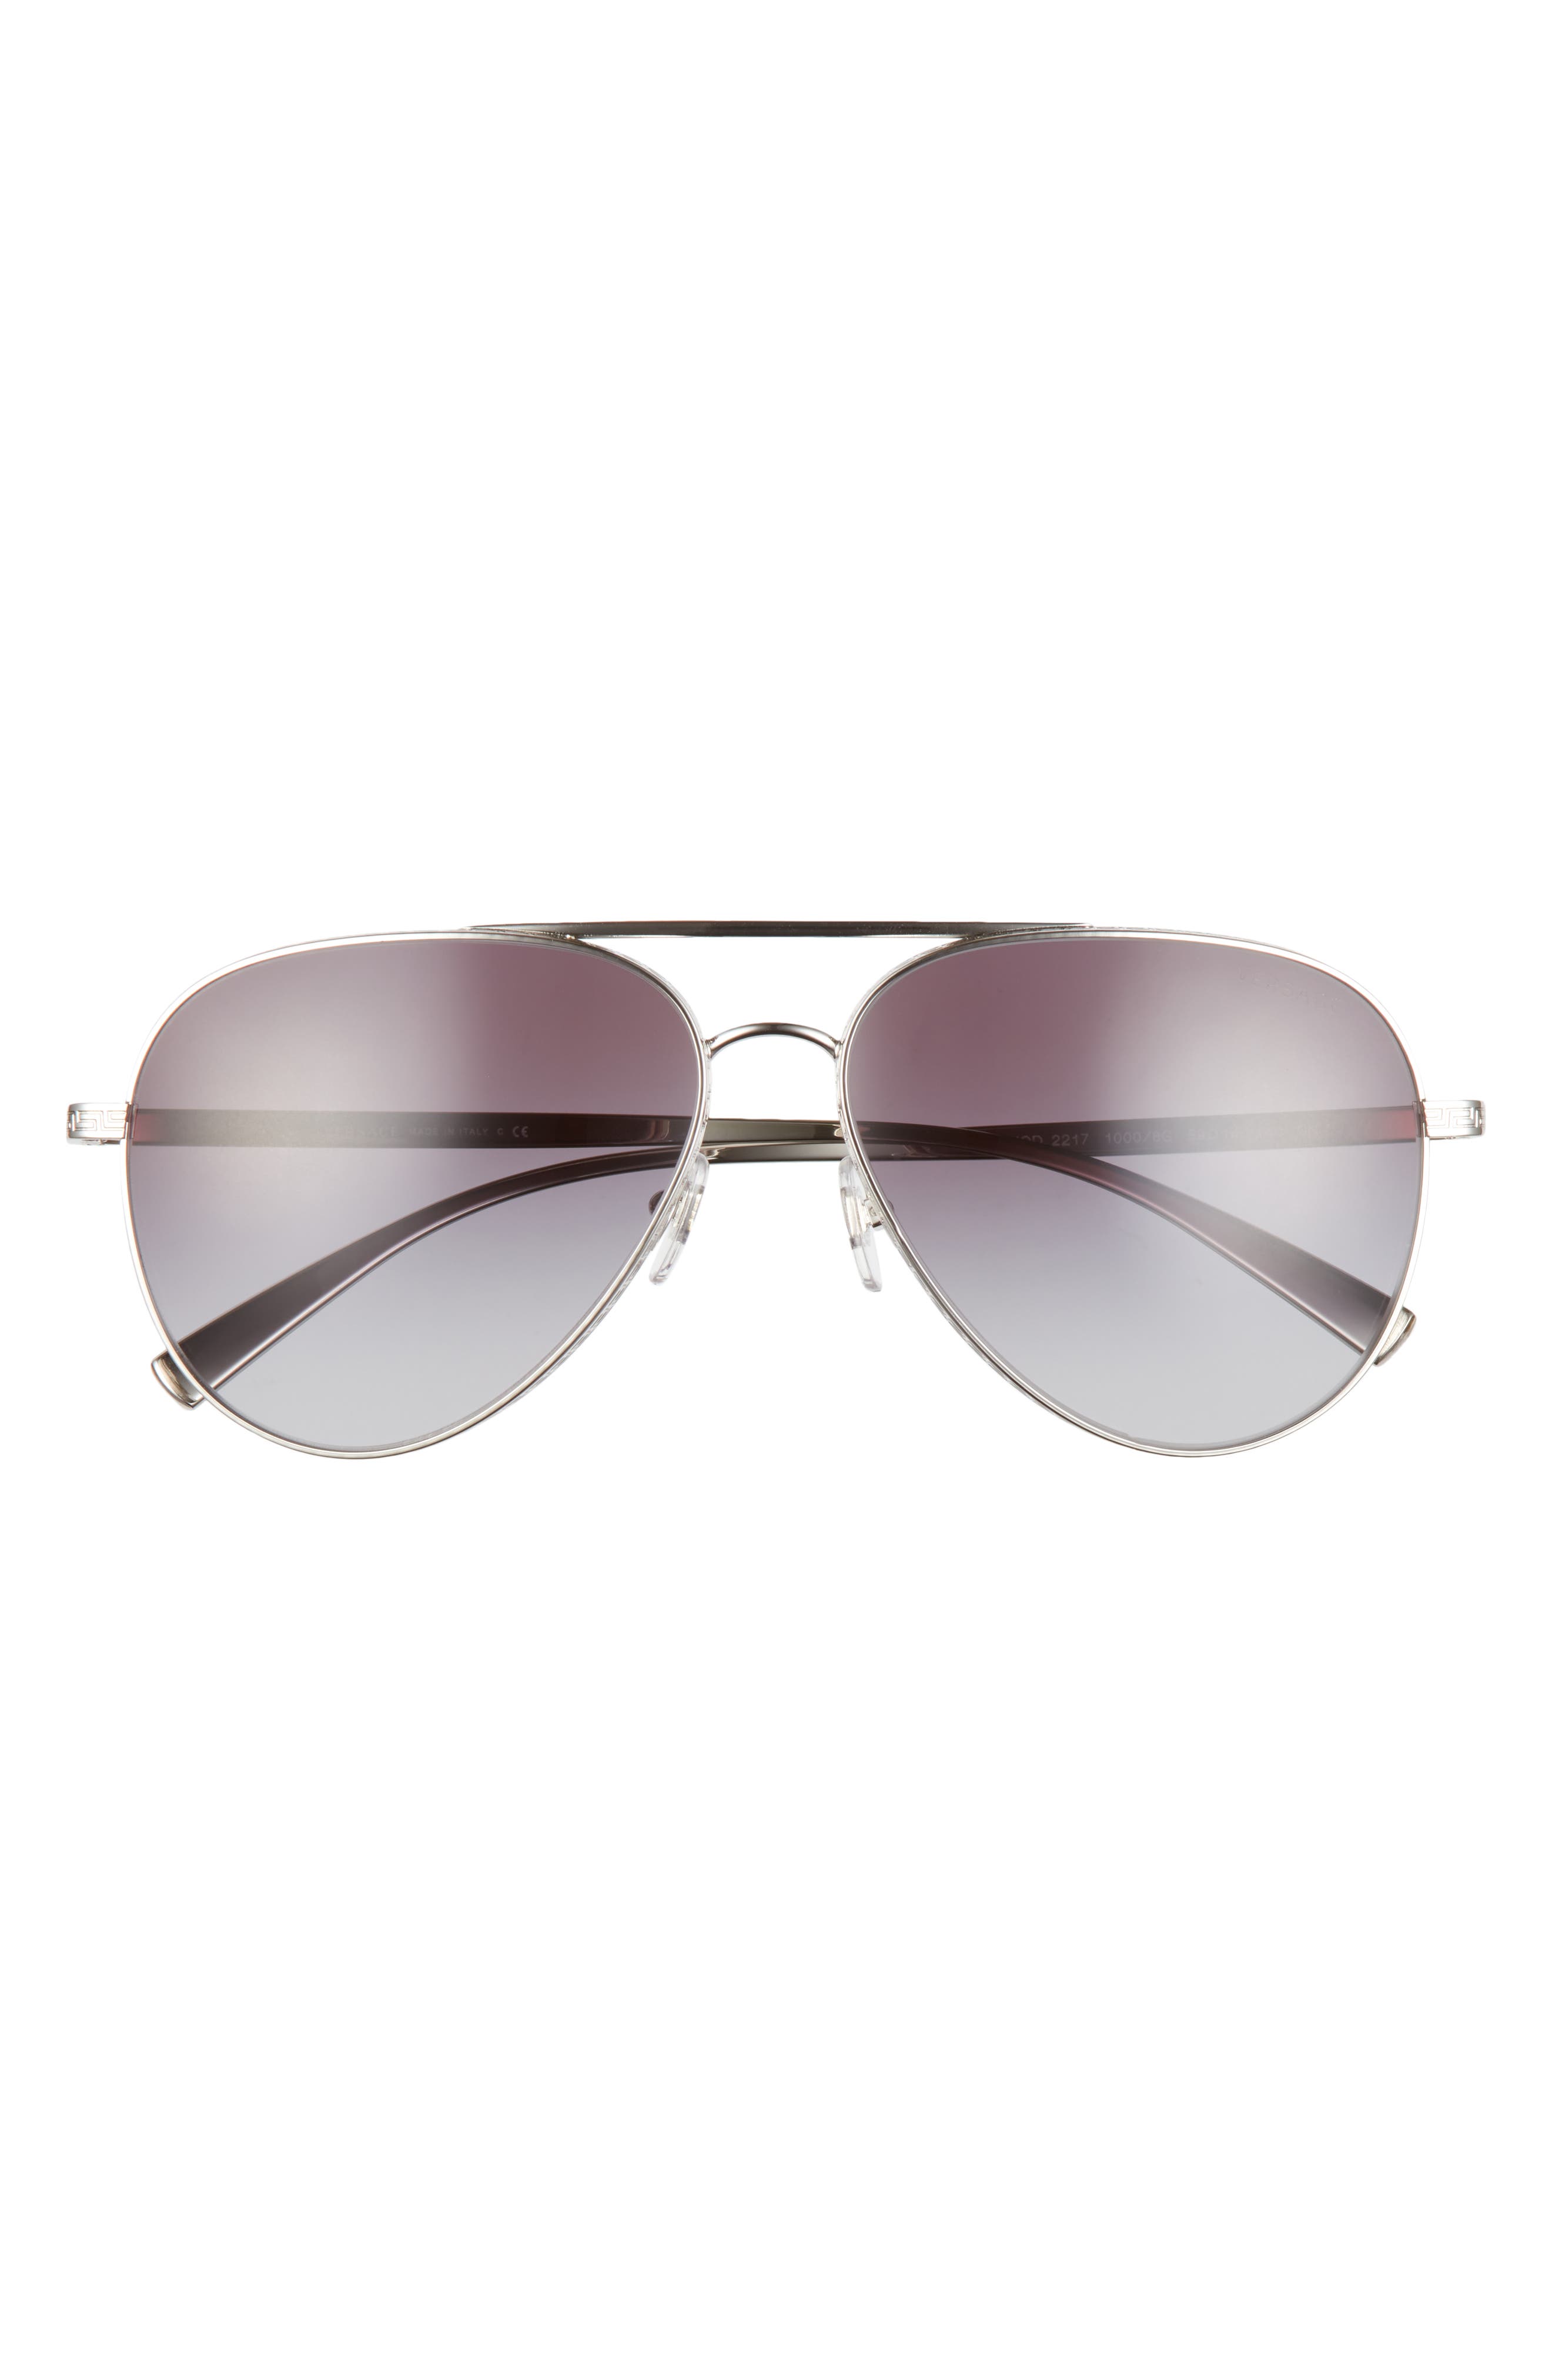 Versace 56mm Gradient Aviator Sunglasses in Silver/Grey Gradient at Nordstrom